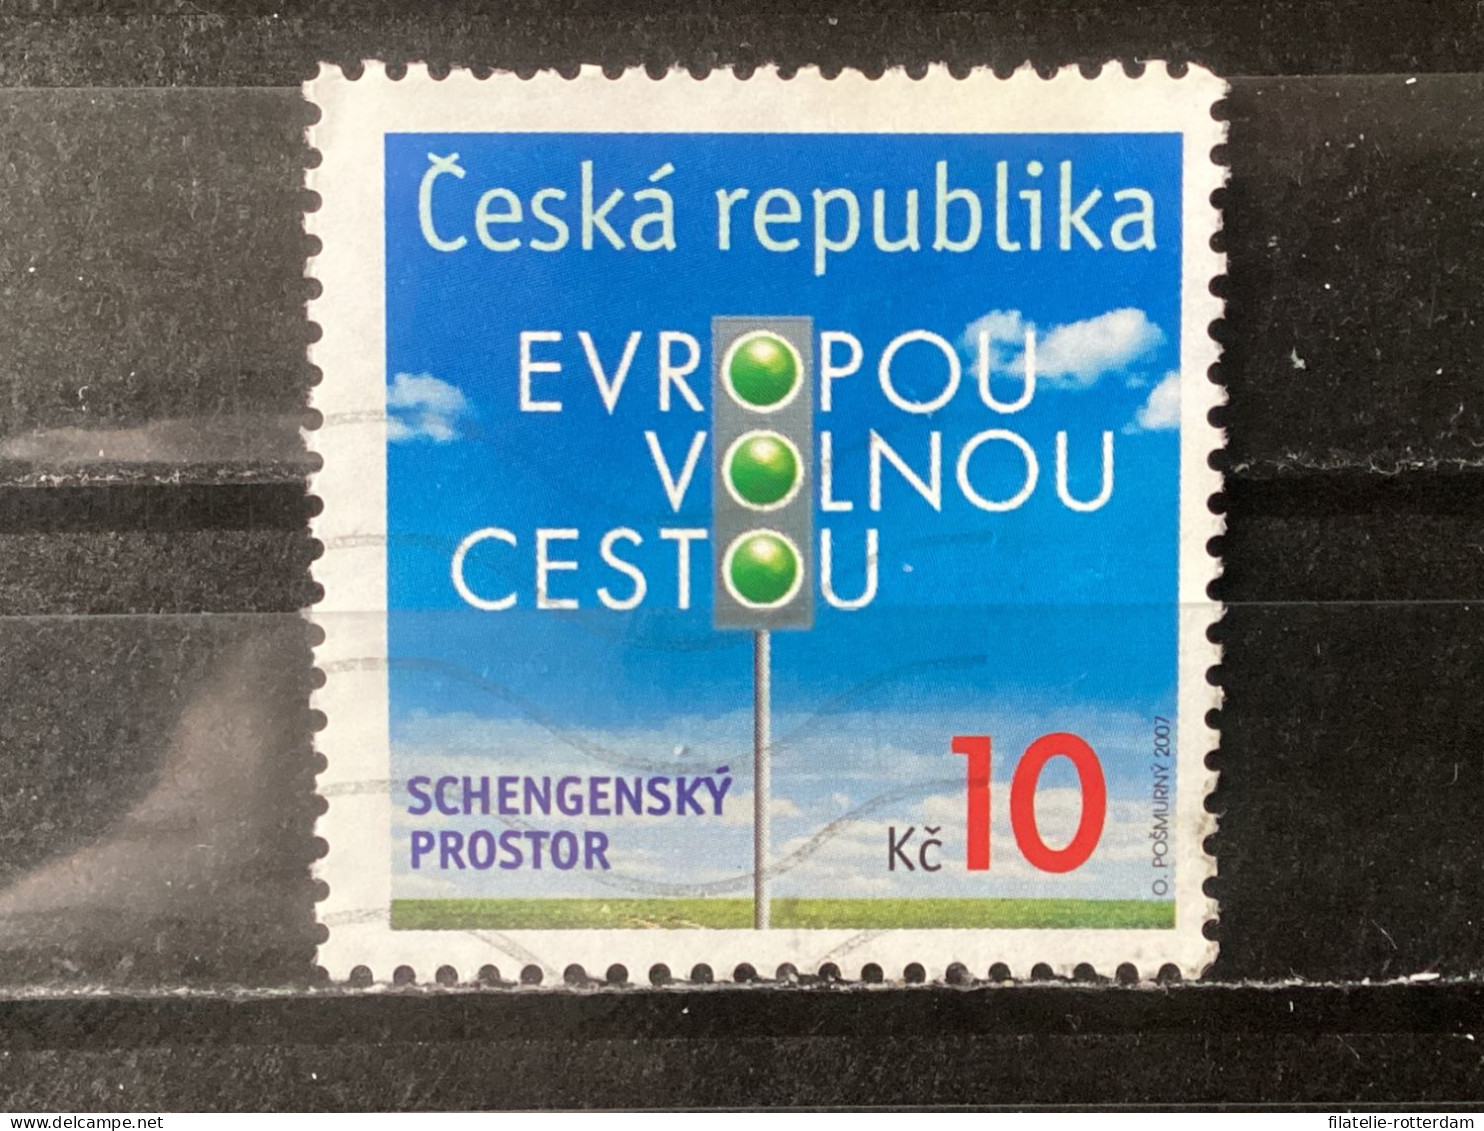 Czech Republic / Tsjechië - No Border Controles (10) 2007 - Used Stamps